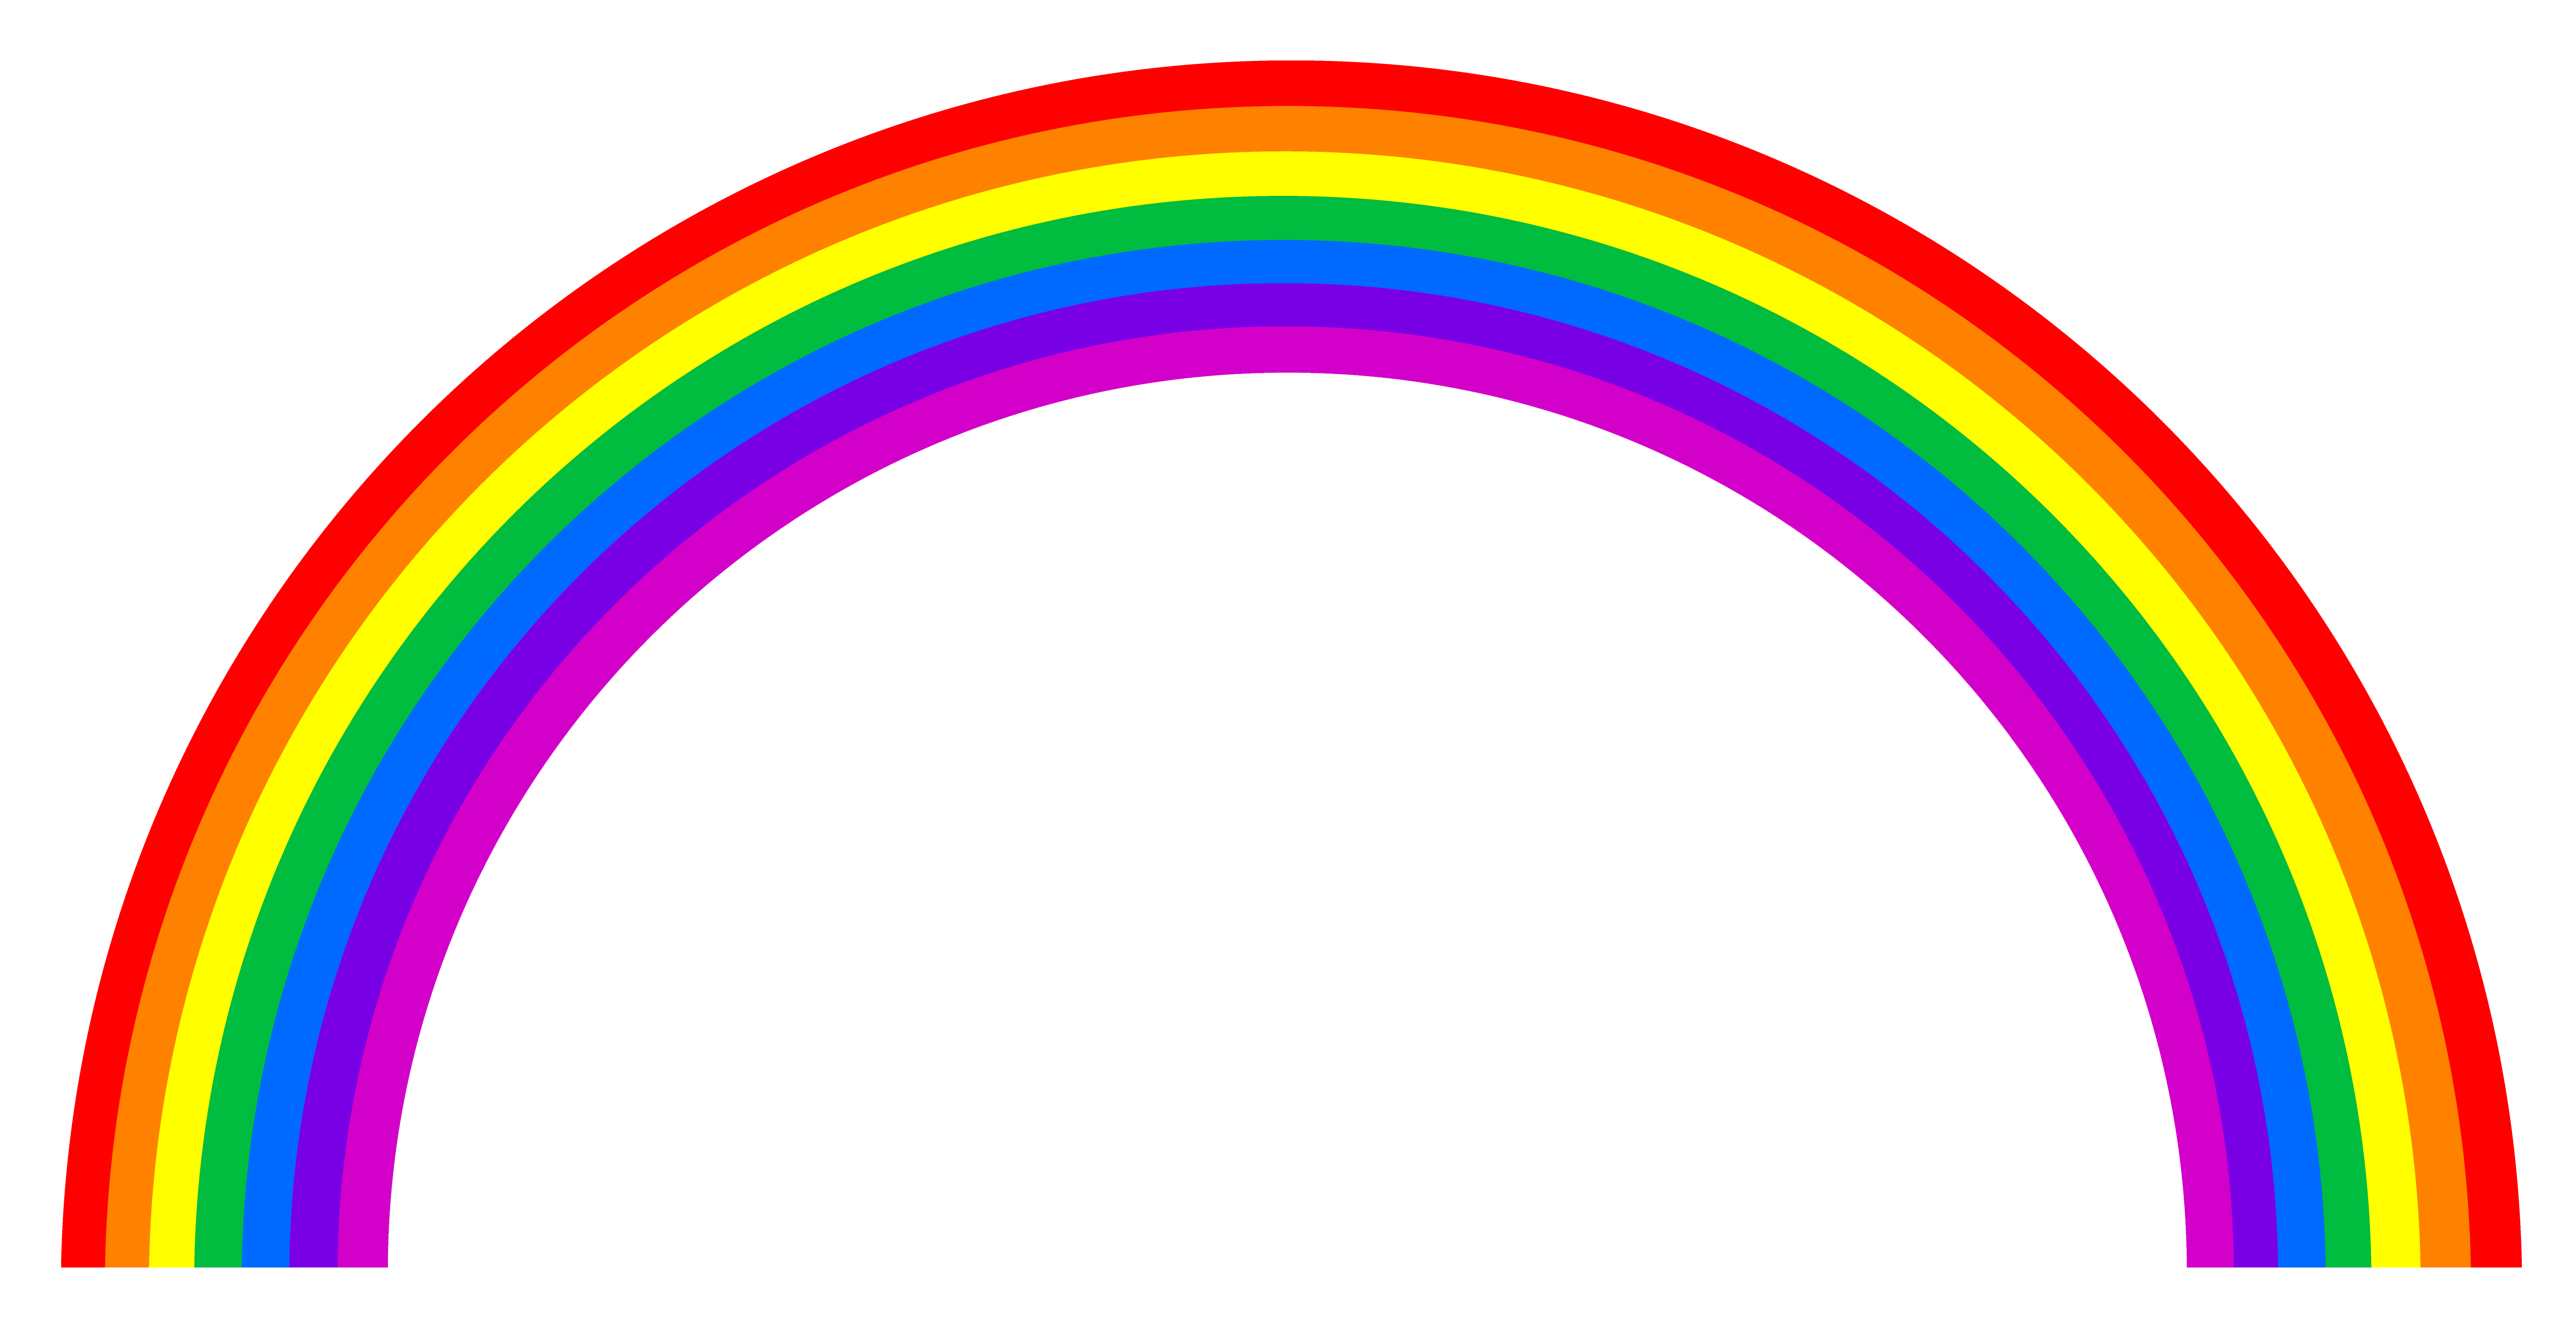 Free transparent rainbow.